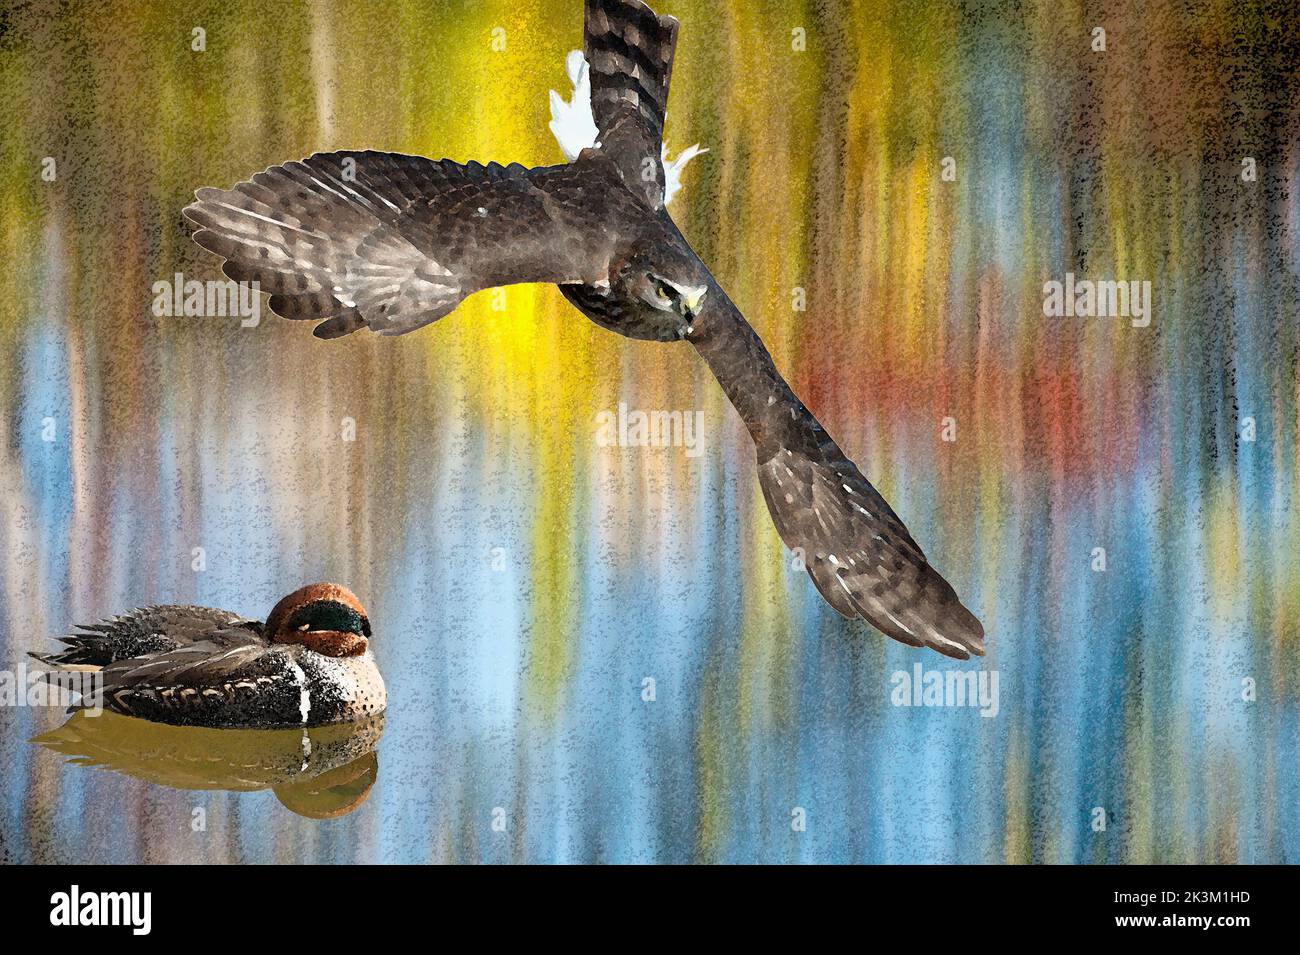 Sharp-shinned hawk and green-winged teal digital illustration Stock Photo